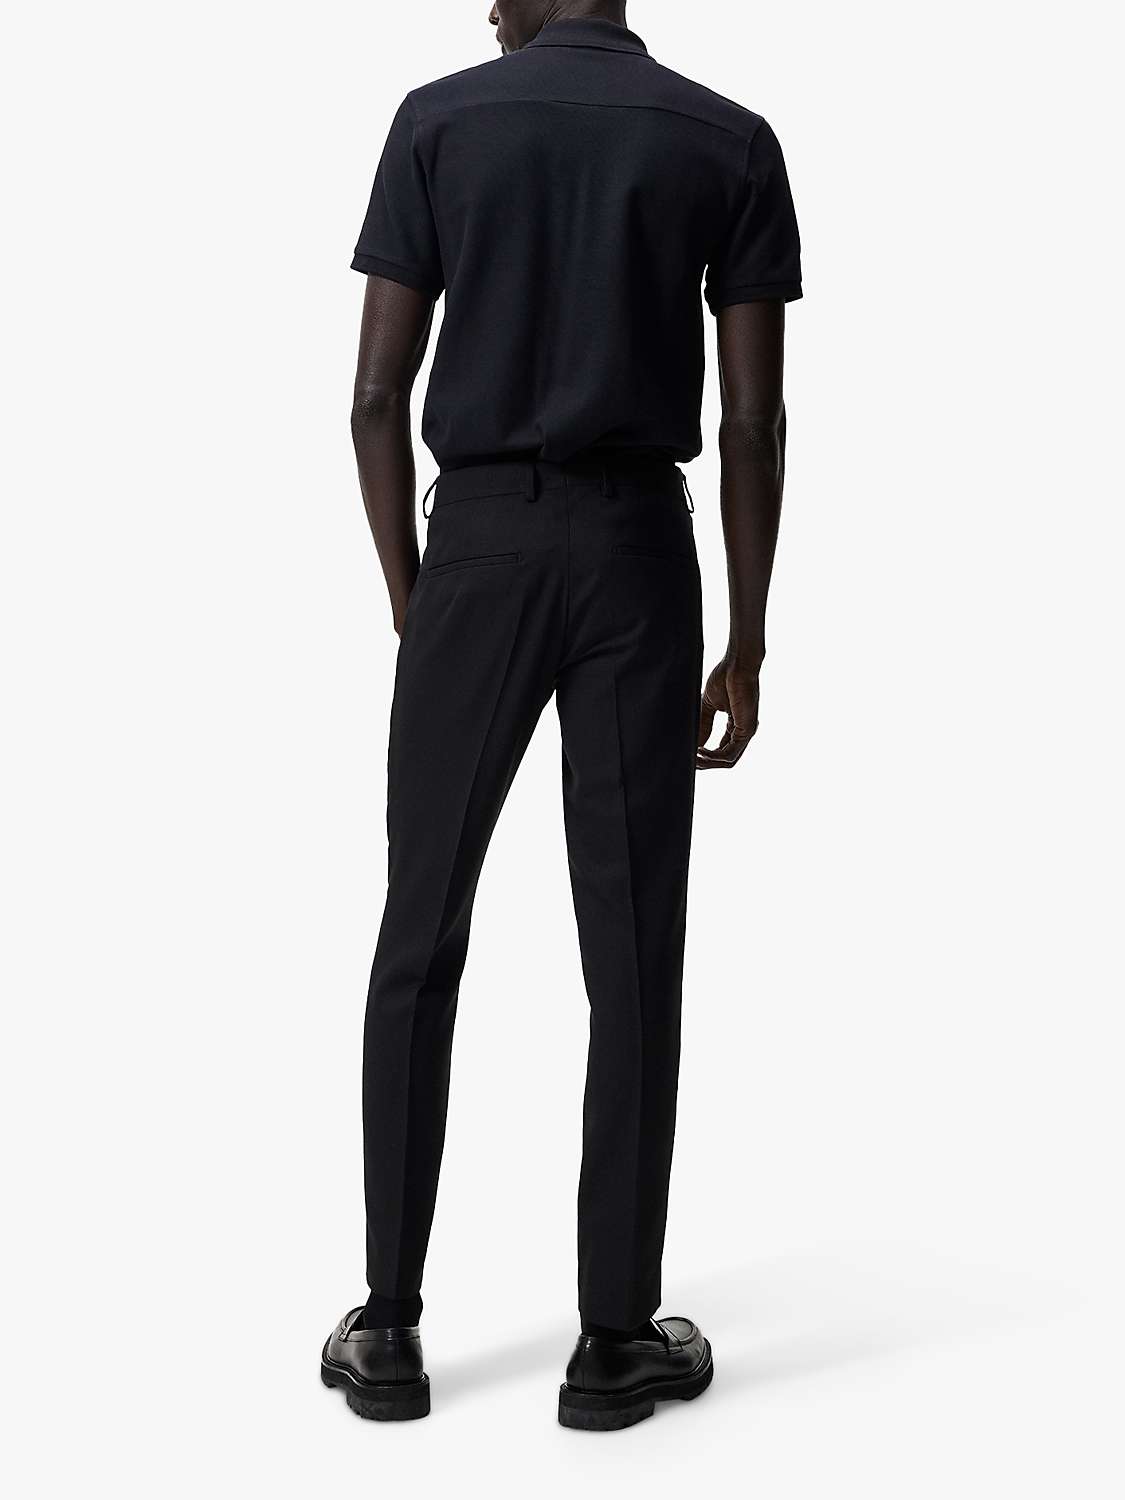 J.Lindeberg Pique Polo Shirt, Black at John Lewis & Partners